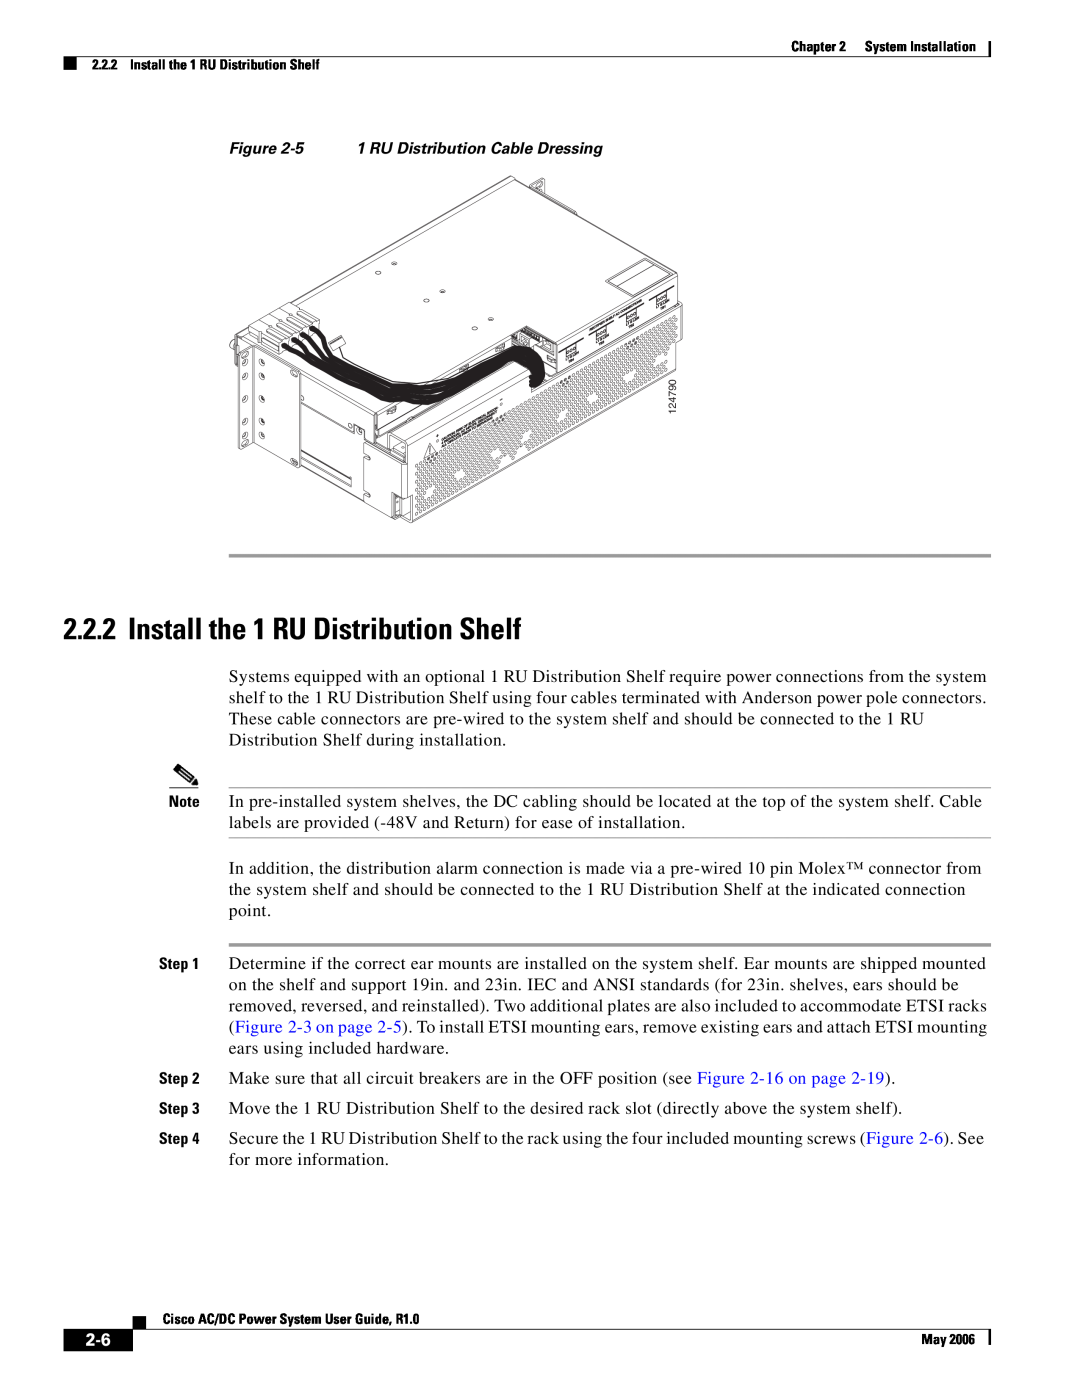 Cisco Systems 124778, 124792, 159330 manual Install the 1 RU Distribution Shelf, 5 1 RU Distribution Cable Dressing 